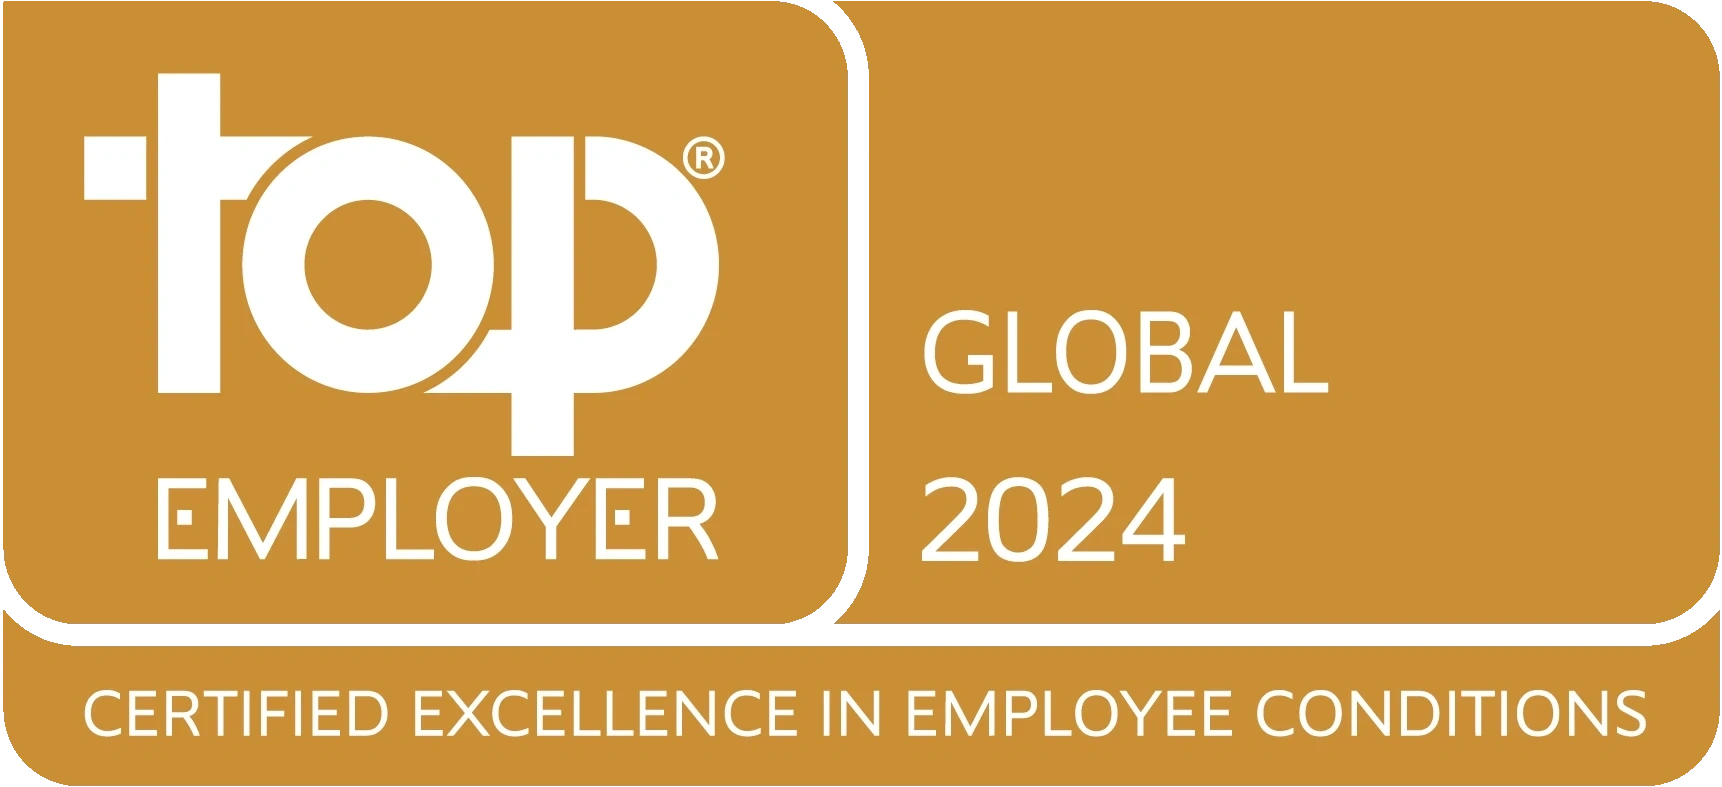 Global Top Employer logo